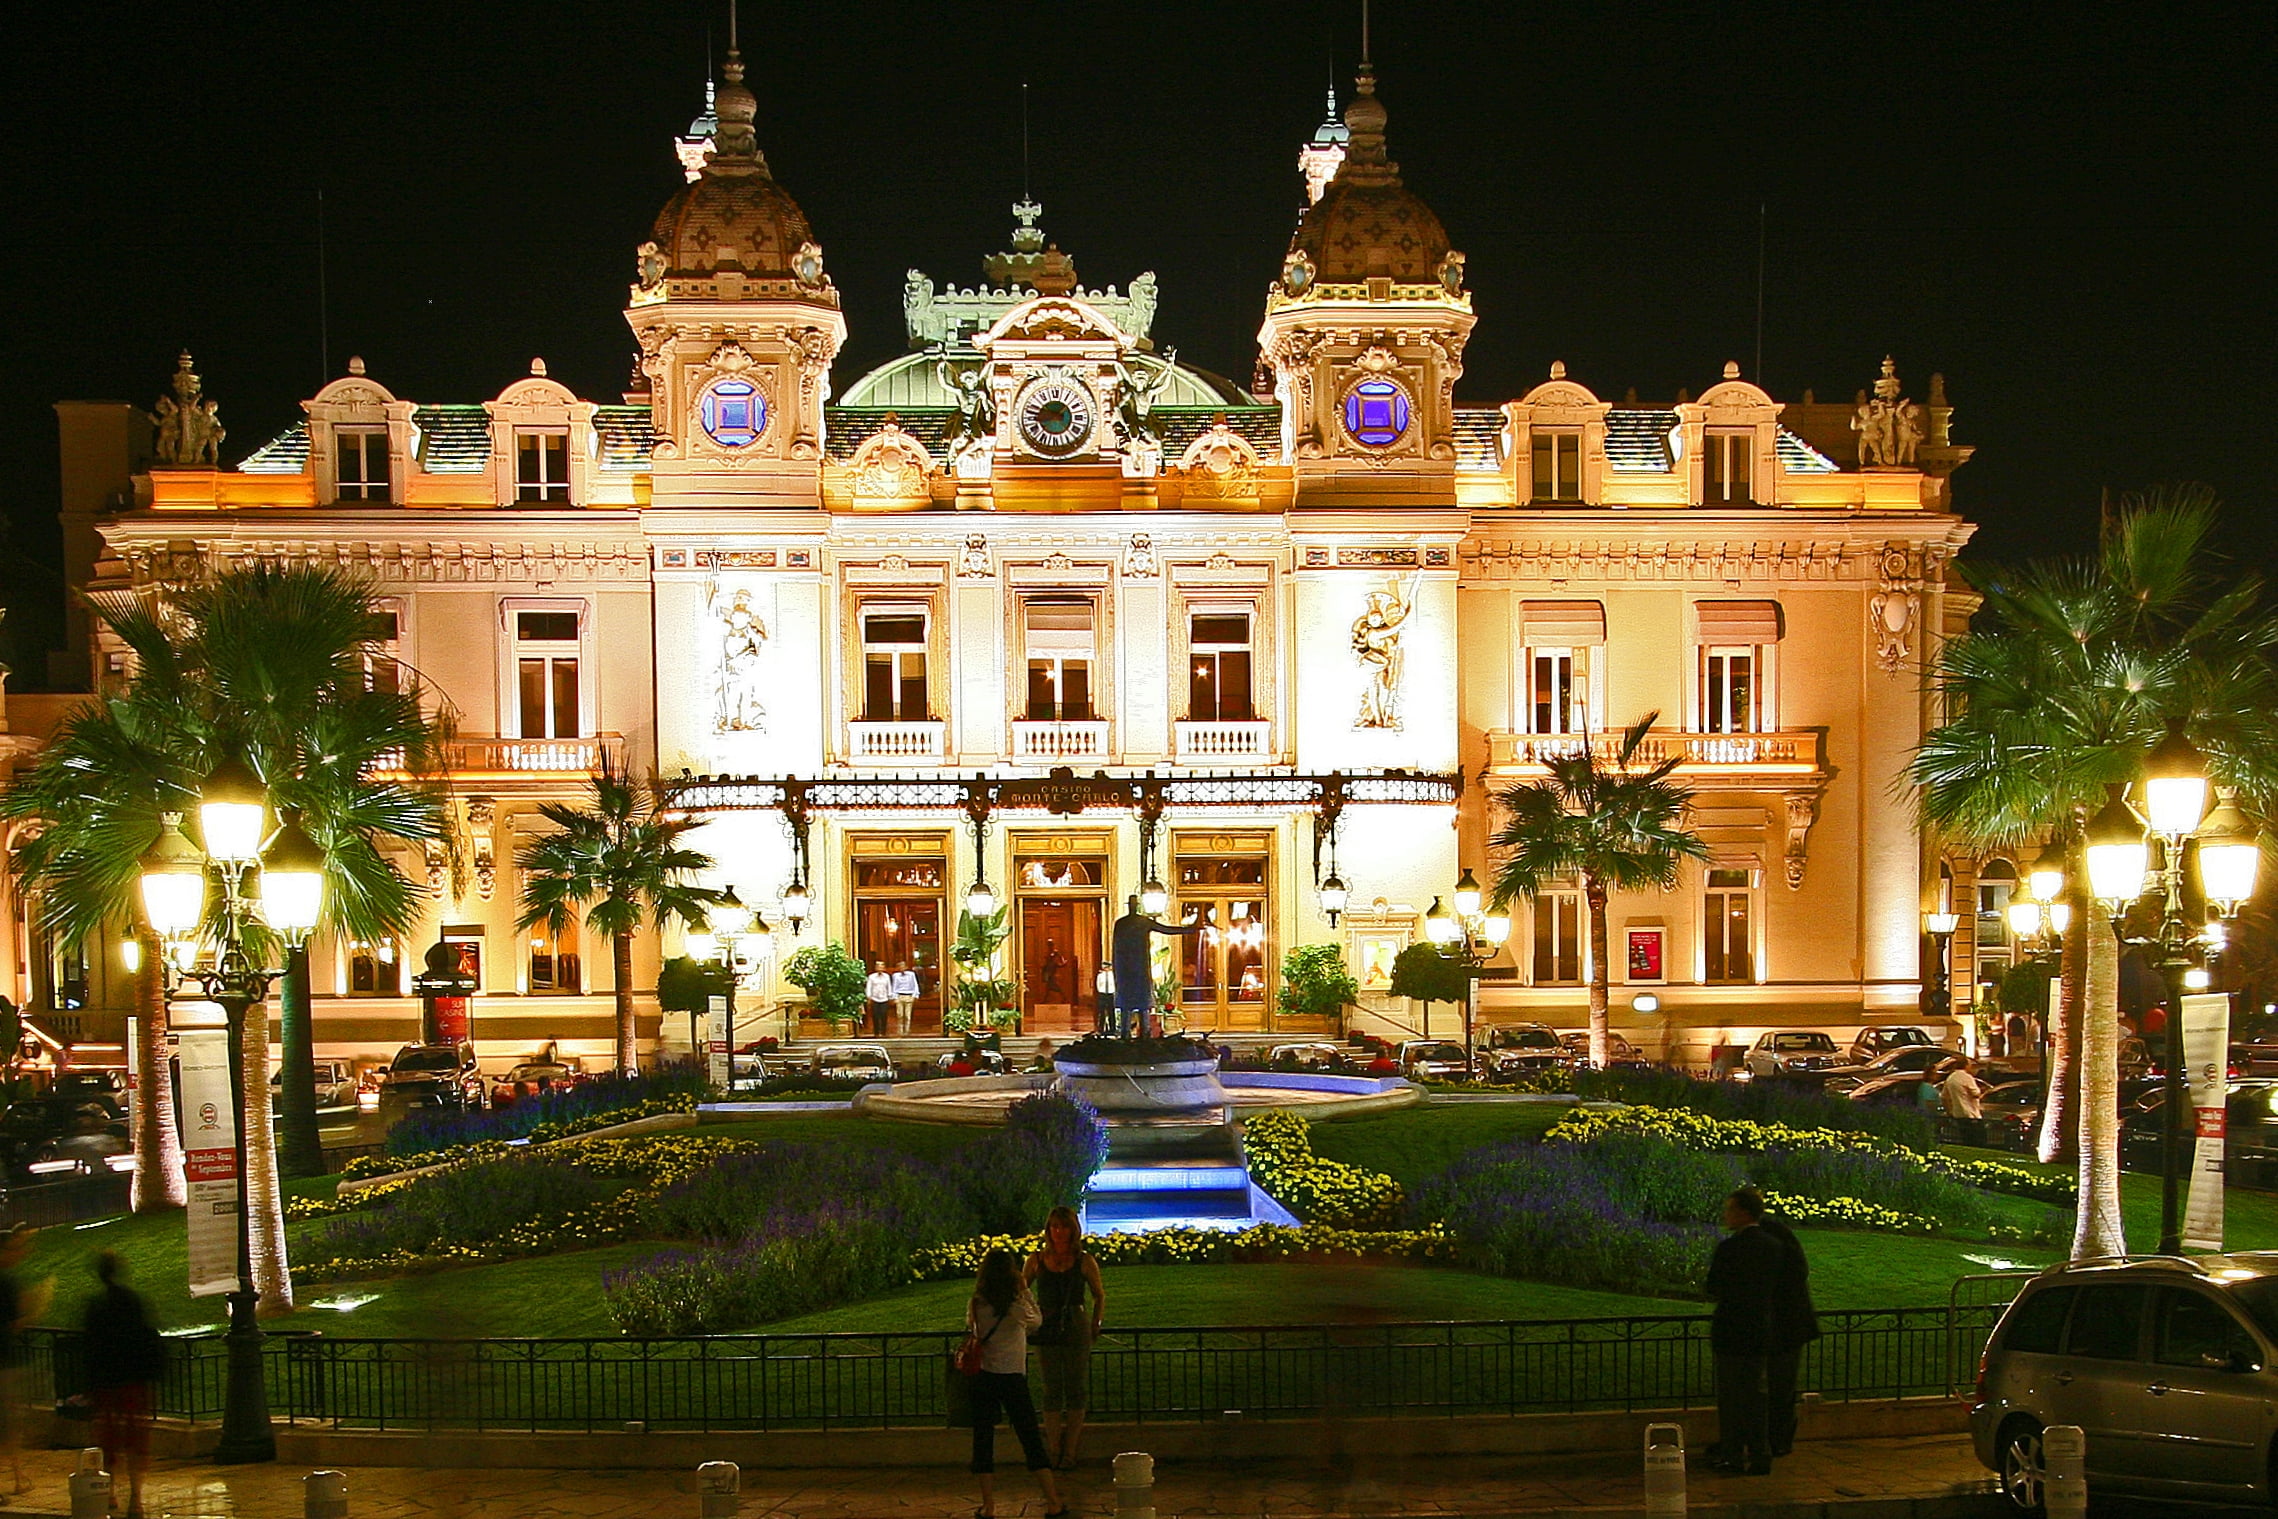 Monte Carlo Casino, white house, Cityscapes, building exterior